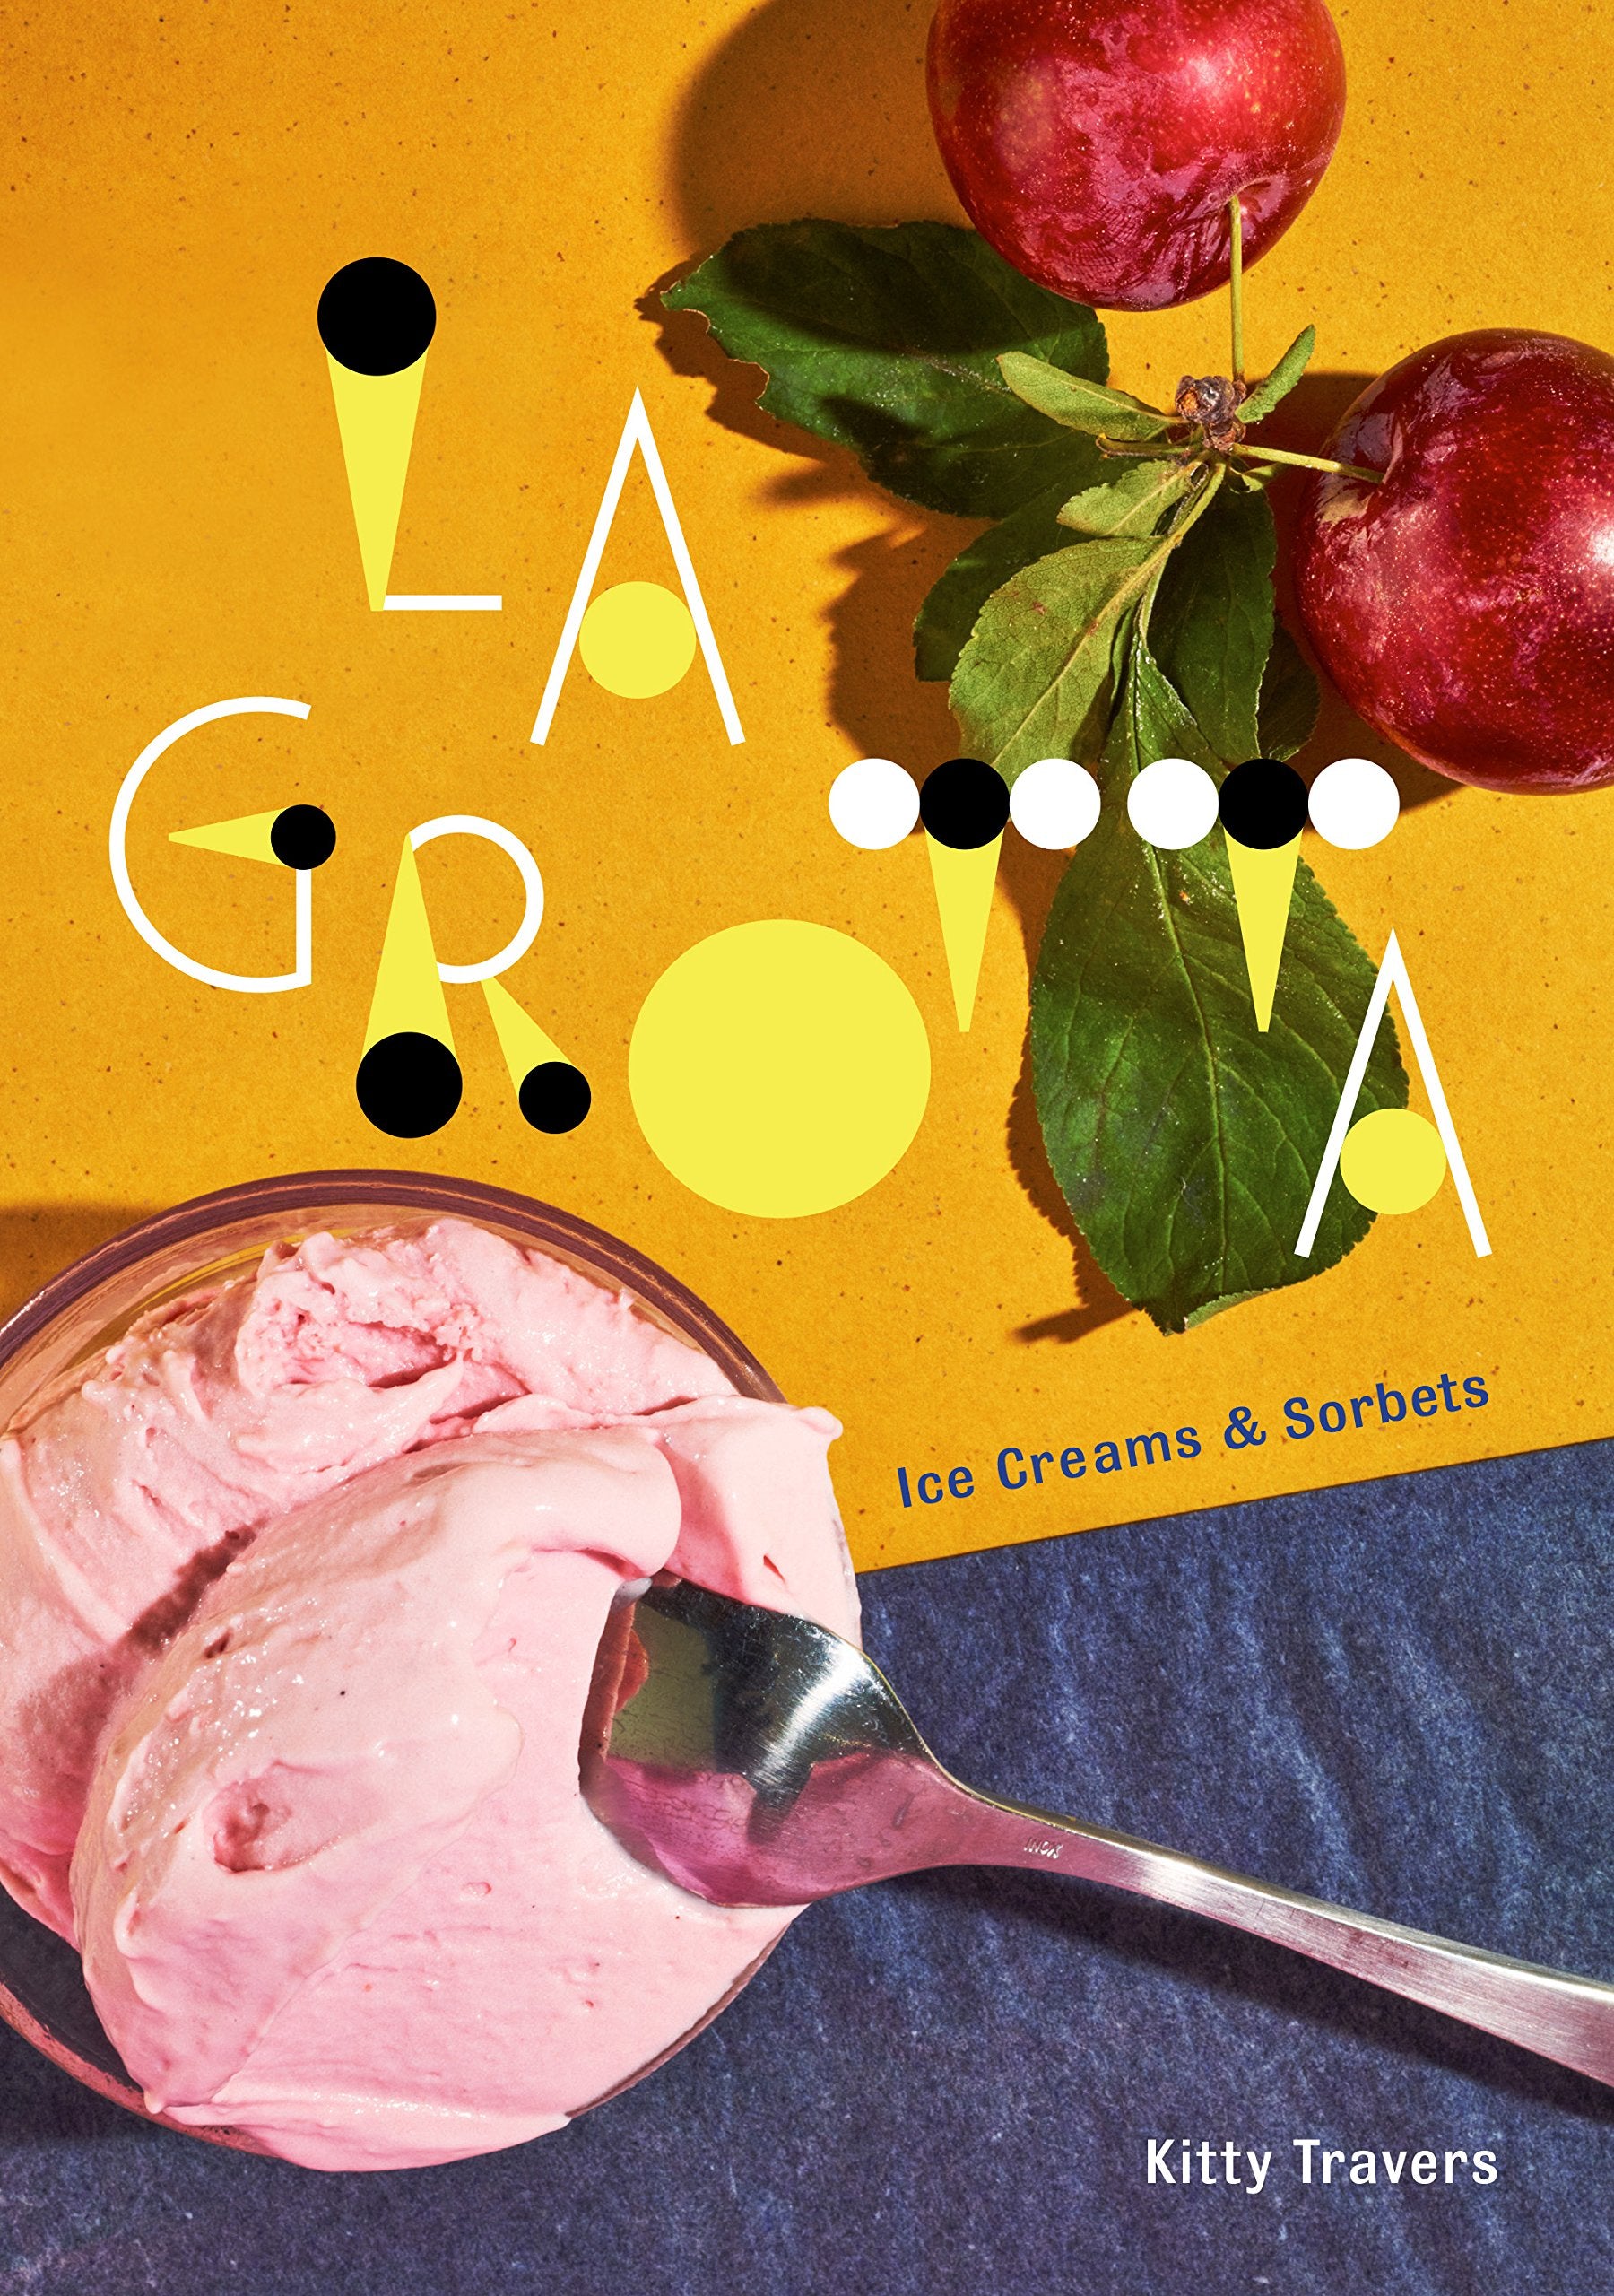 La Grotta: Ice Creams and Sorbets (Kitty Travers)